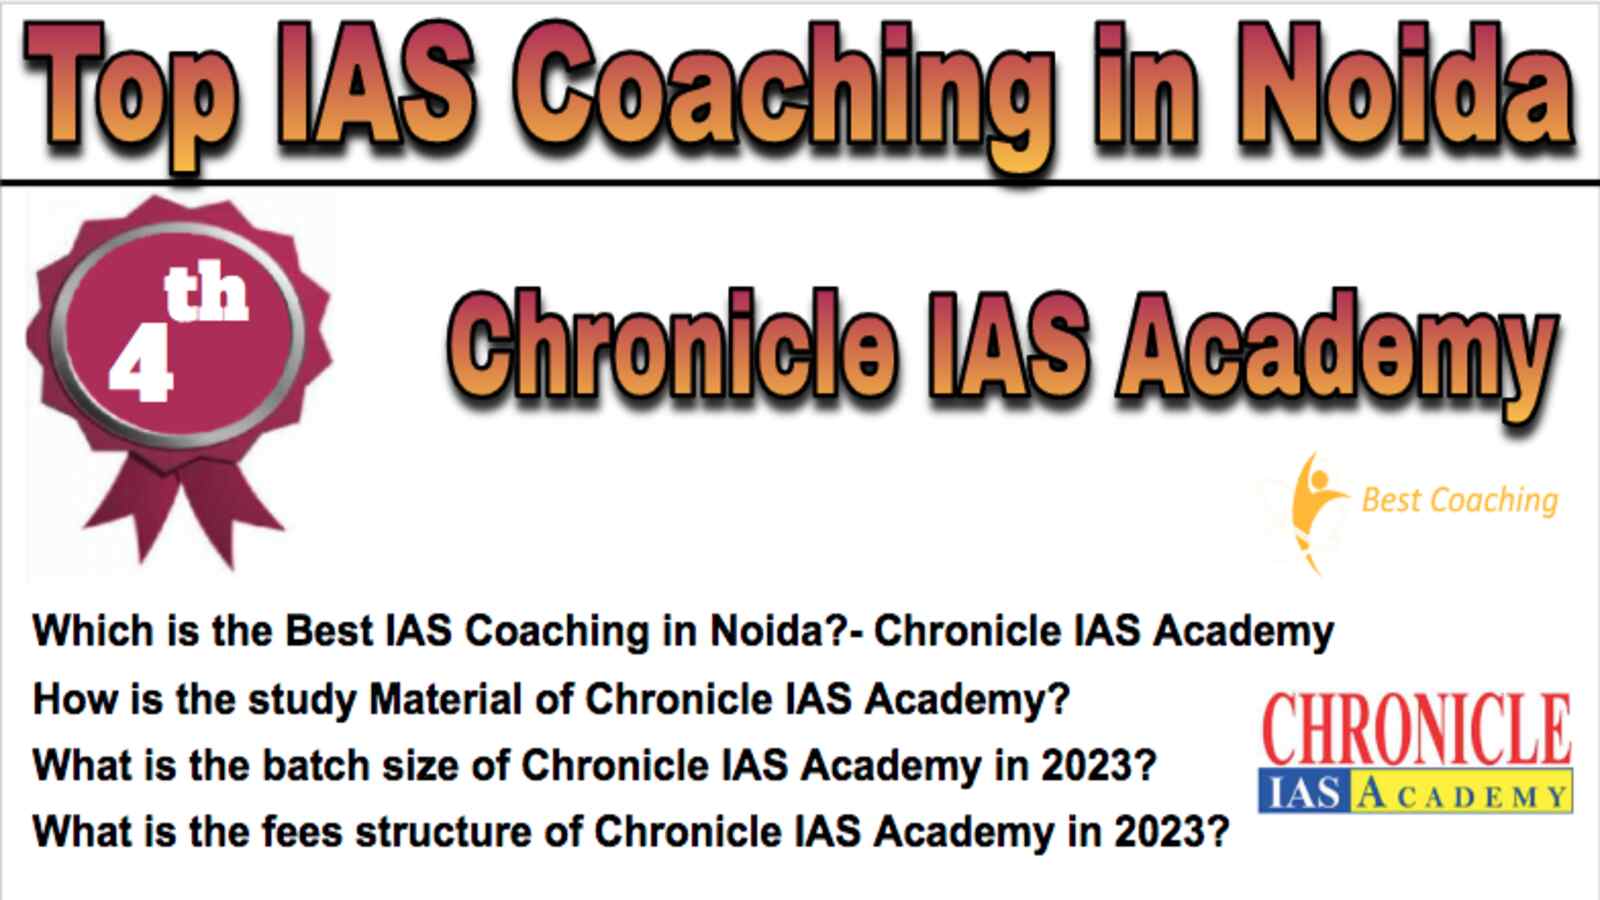 Rank 4 Best IAS Coaching in Noida